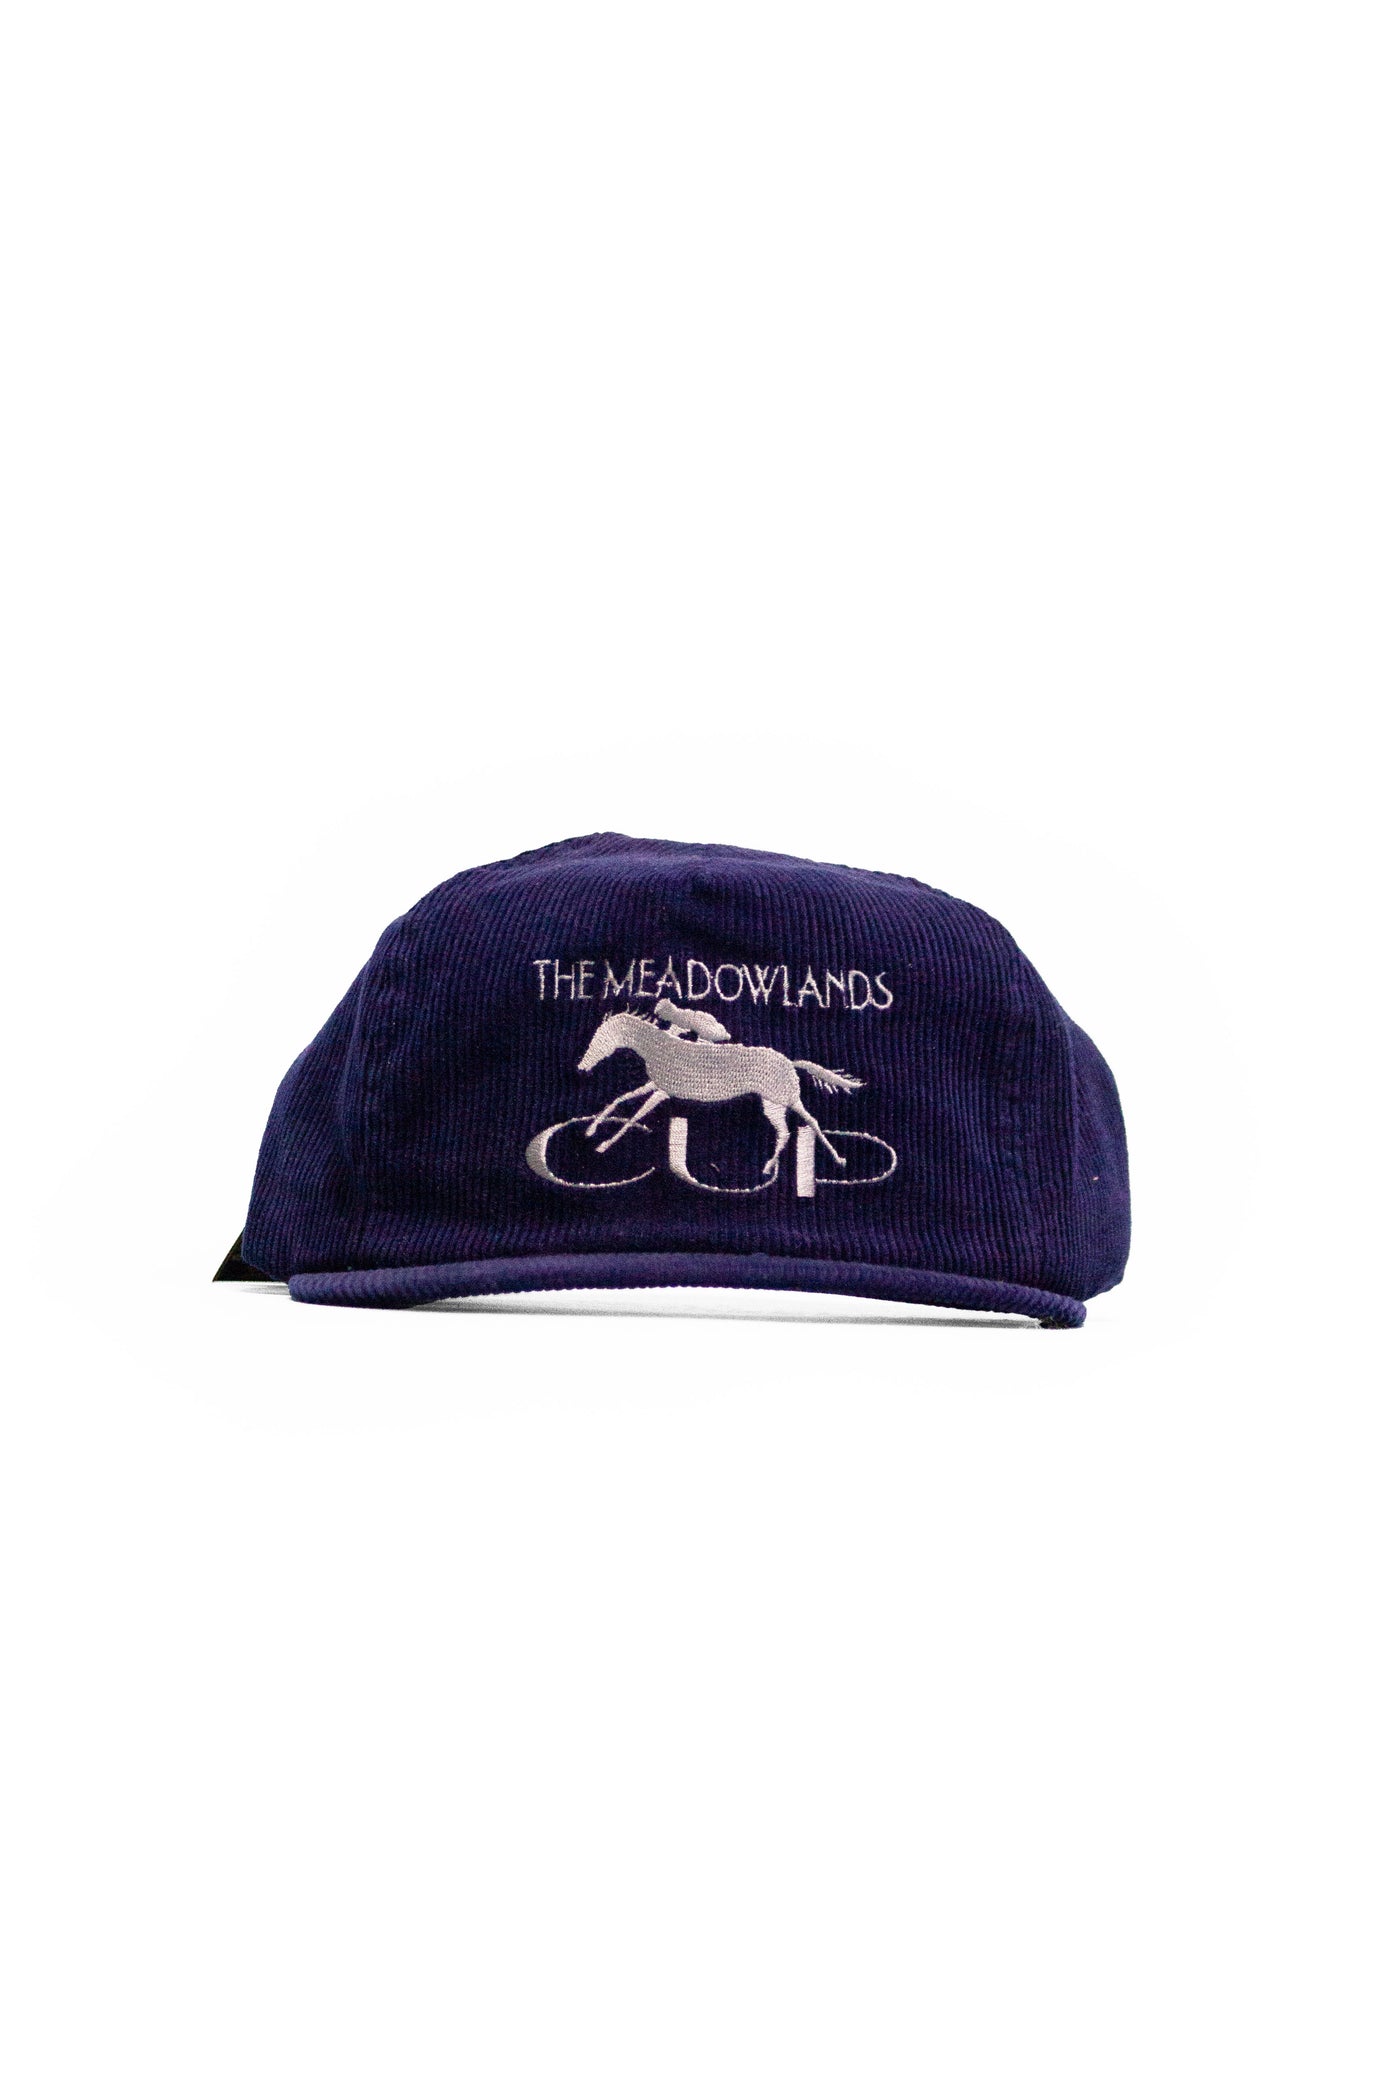 Vintage 90s The Meadowlands Cup Corduroy Snapback